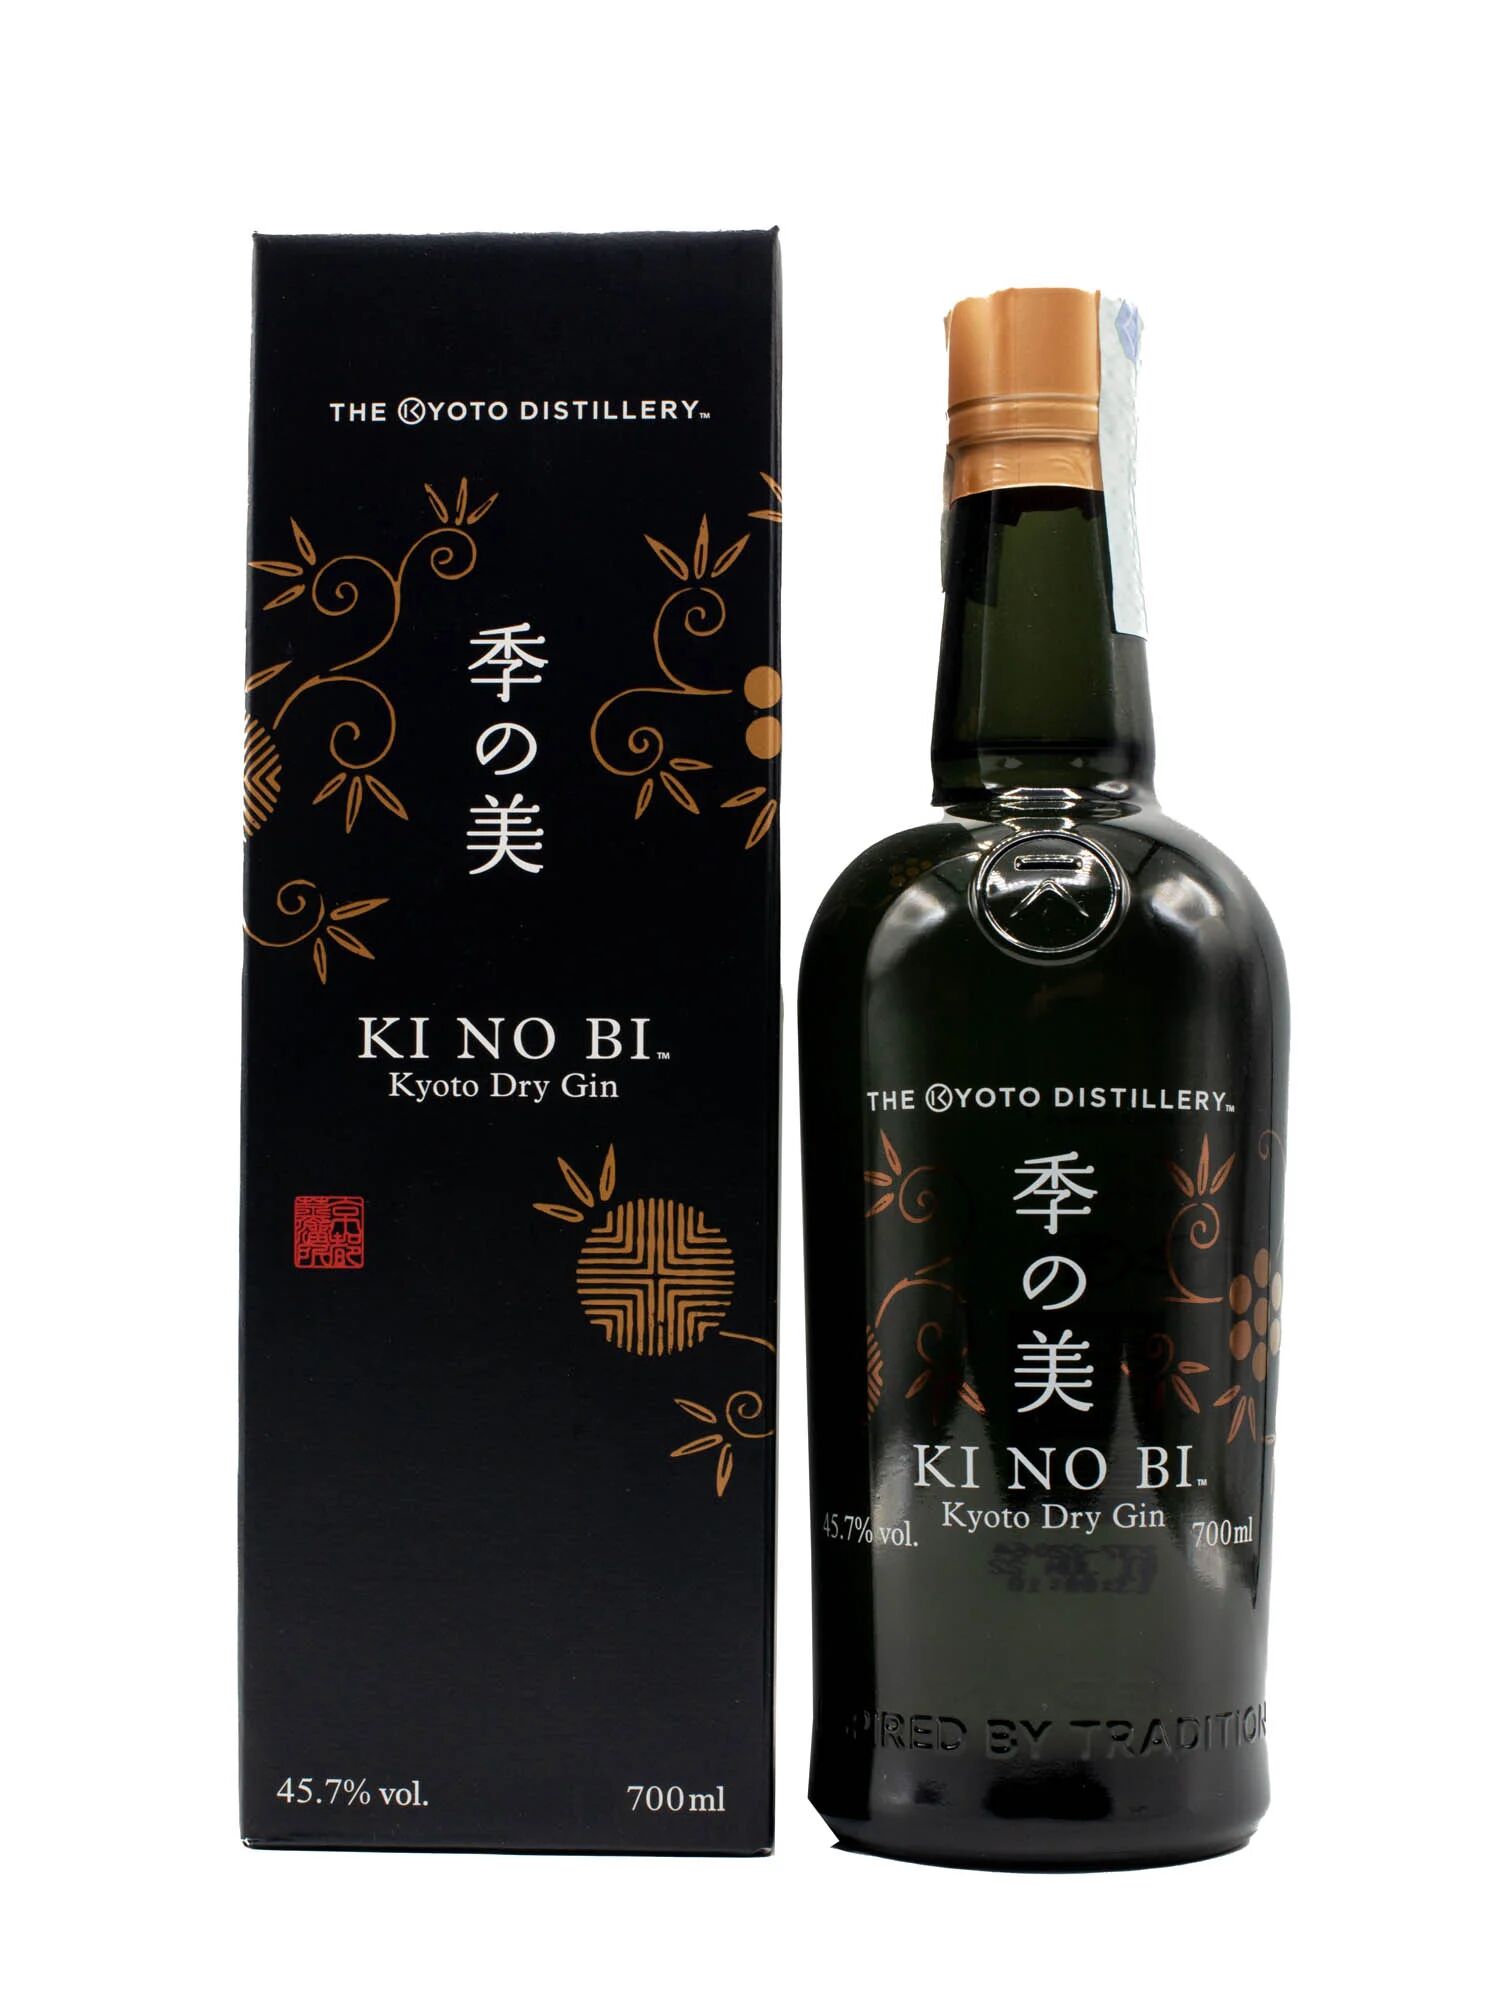 The Kyoto Distillery Gin Kinobi Kyoto Dry Gin